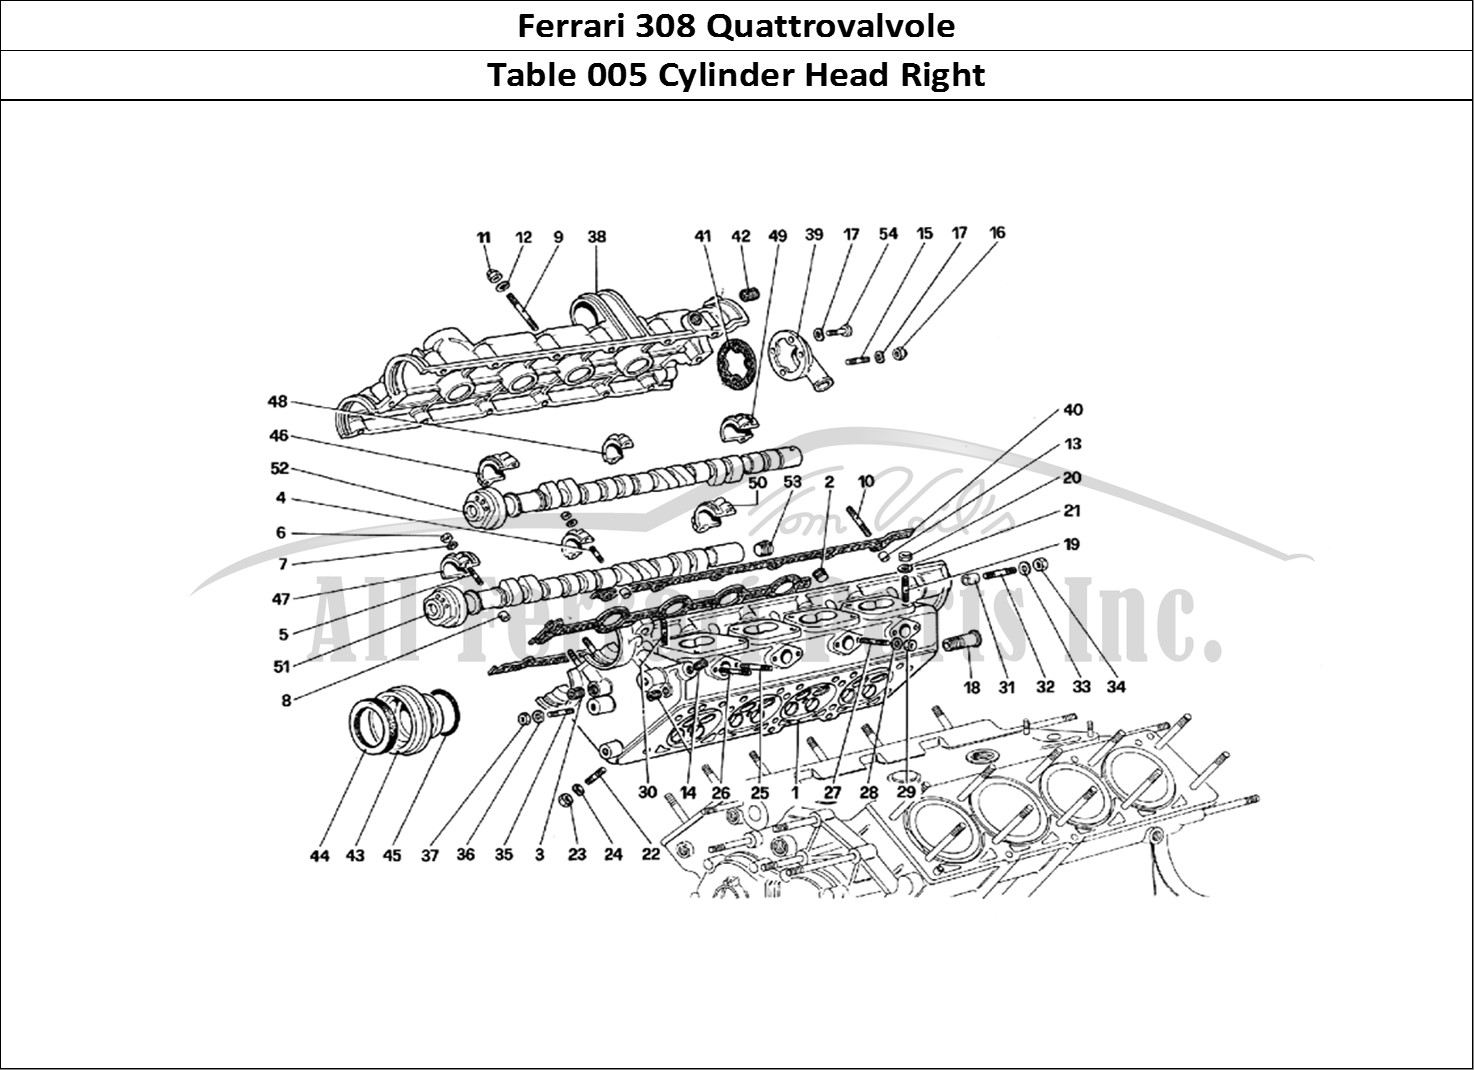 Ferrari Parts Ferrari 308 Quattrovalvole (1985) Page 005 Cylinder Head (Right)